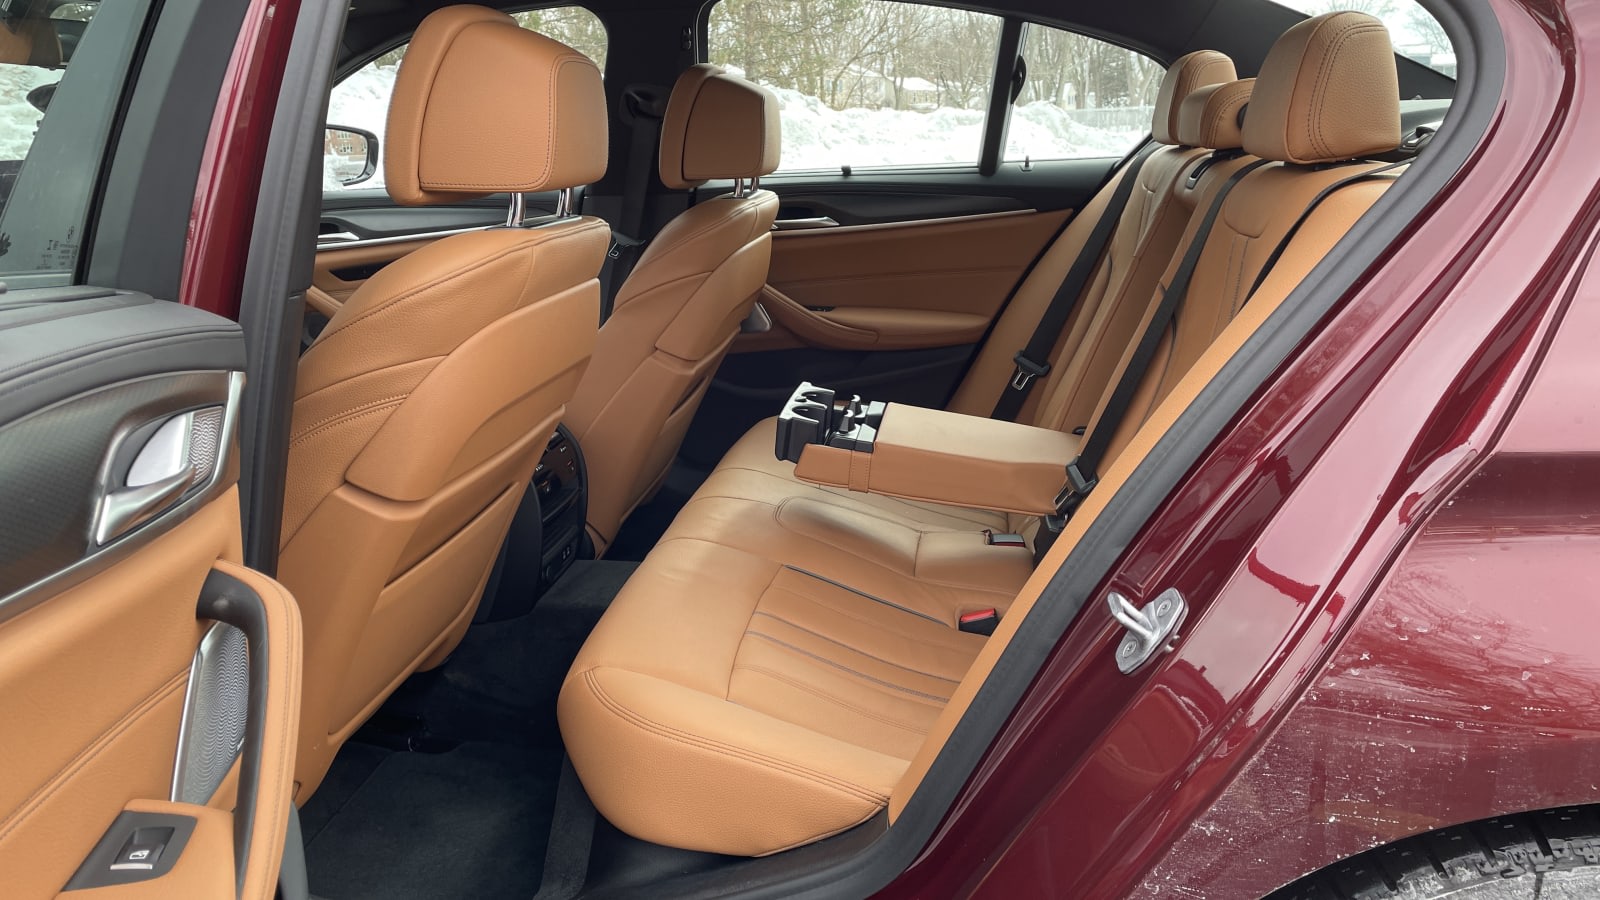 BMW 550i interior - Seats